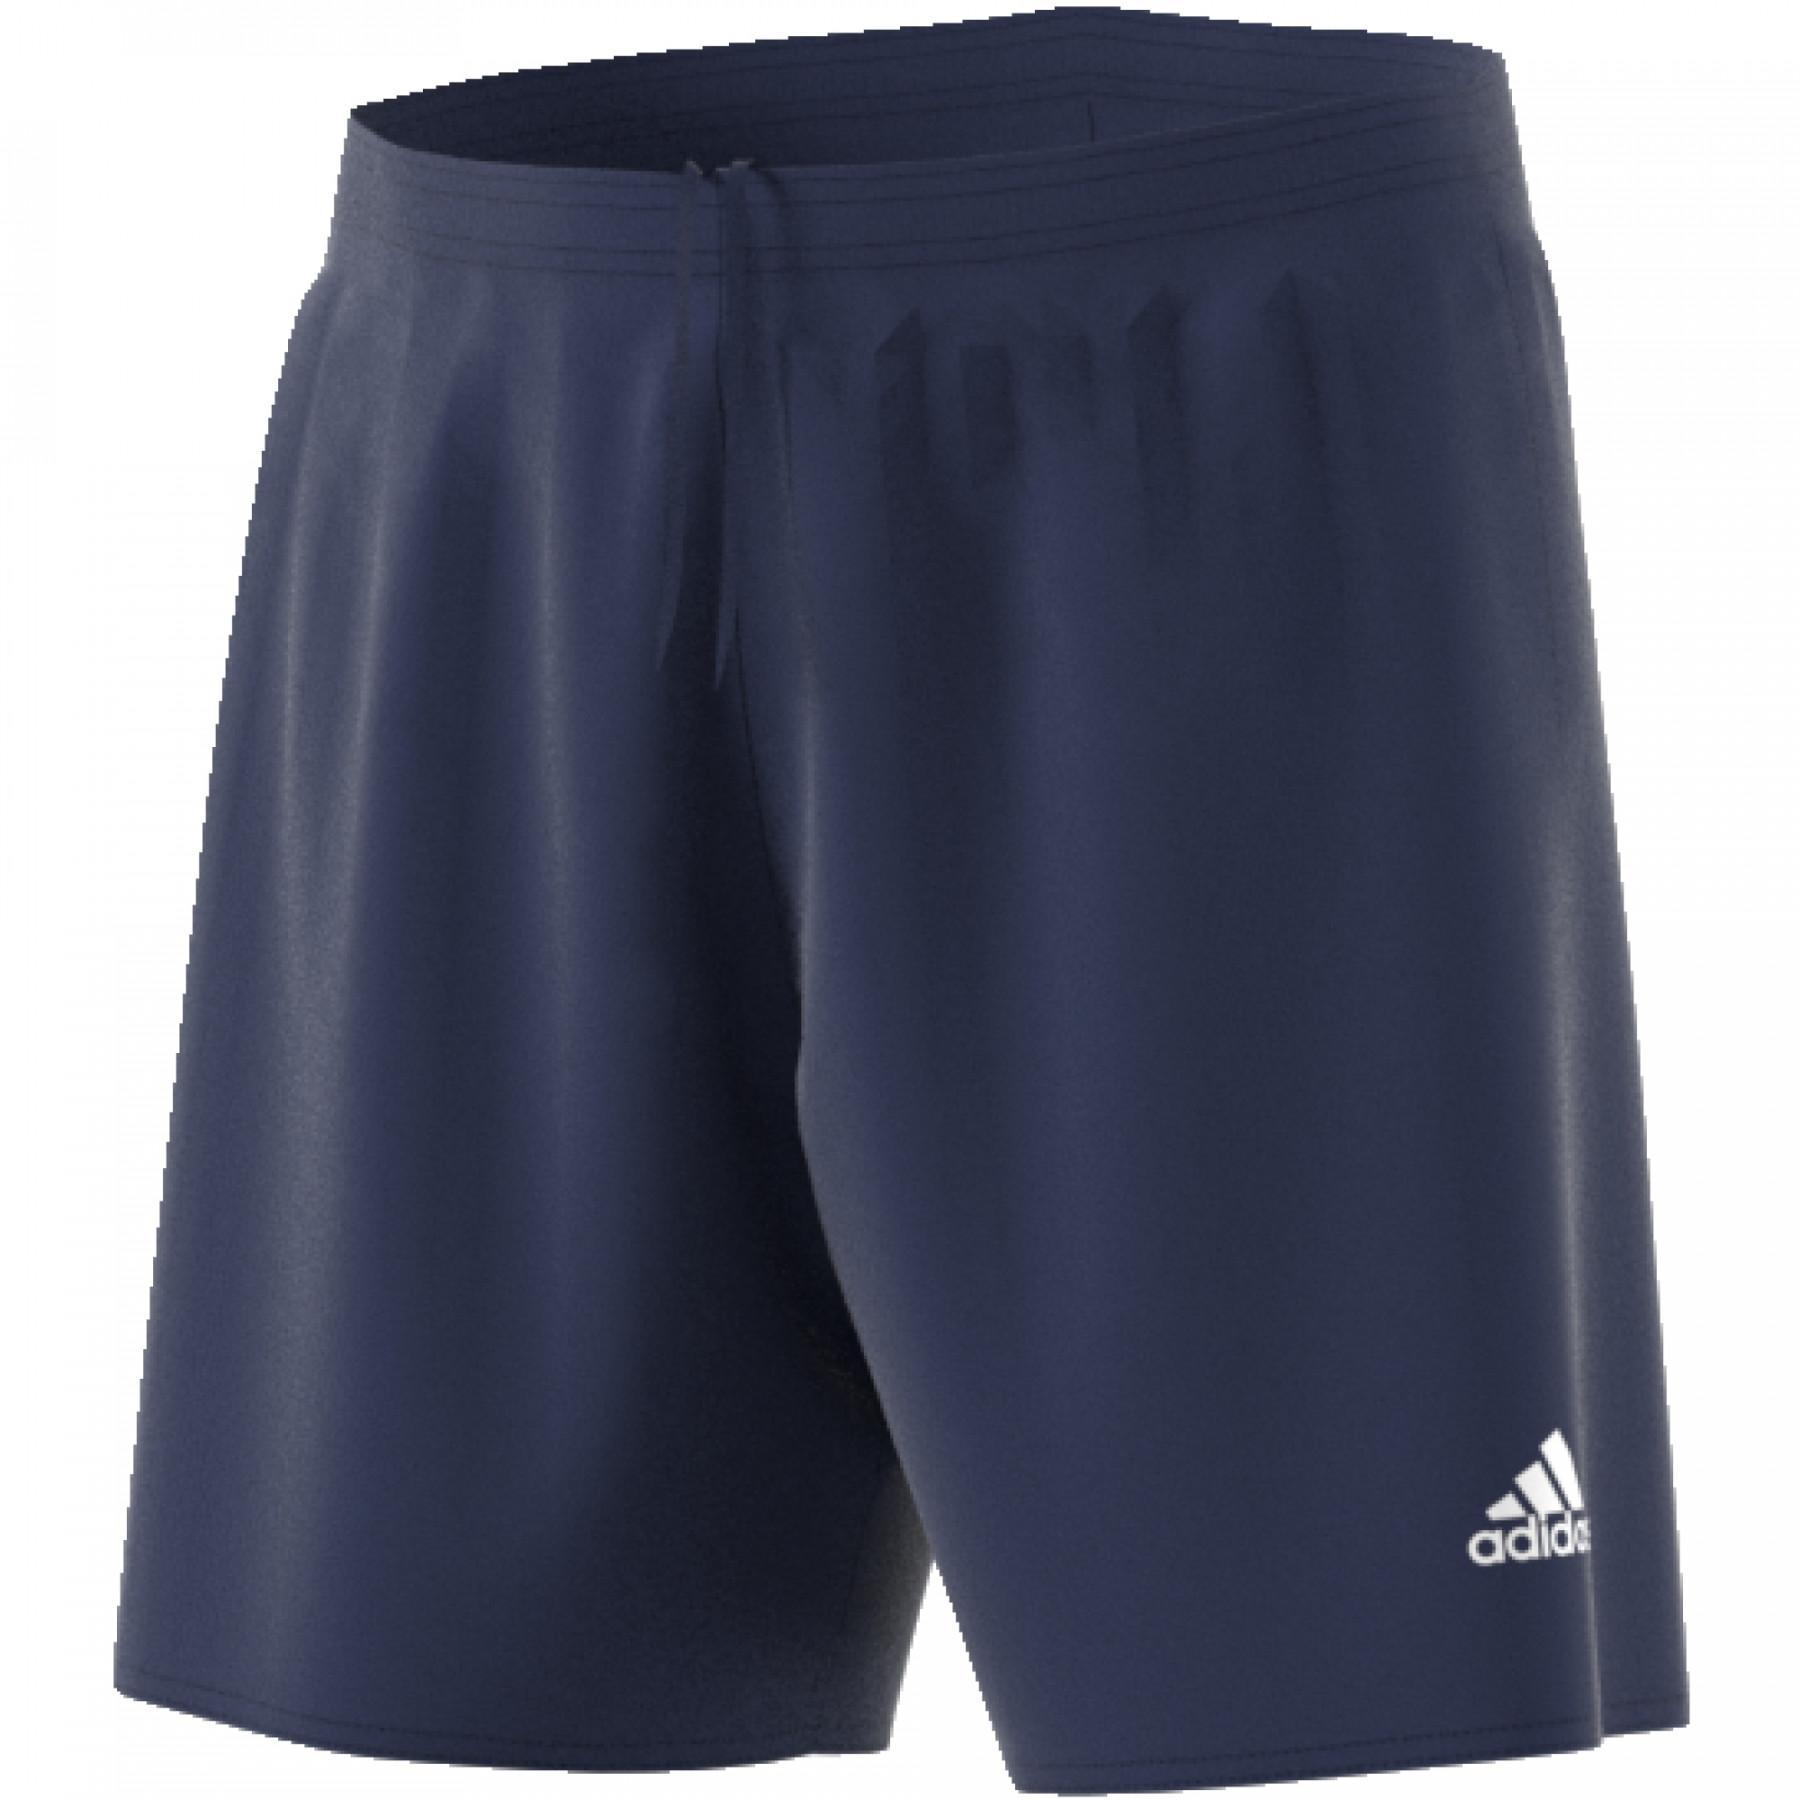 Slipper-Shorts adidas Parma 16 